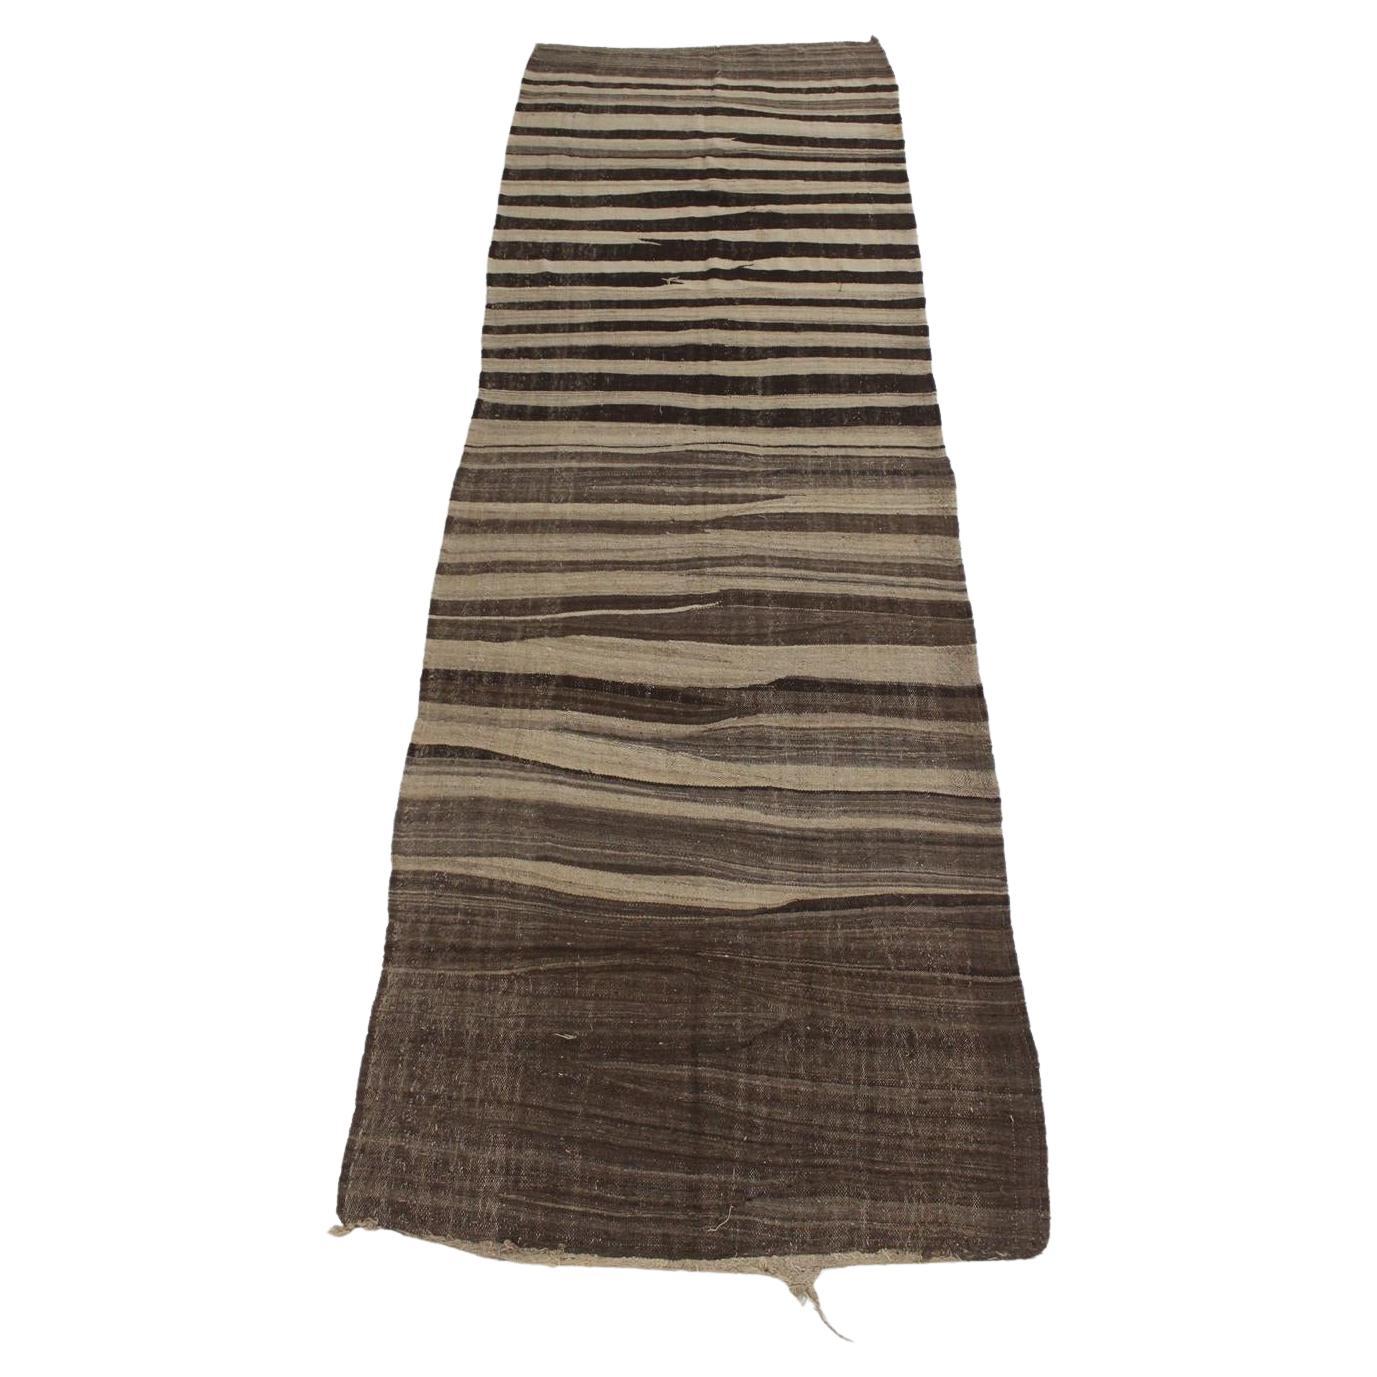 Vintage Moroccan Kilim rug - Stripes in beige+brown - 4.6x14.4feet / 142x440cm For Sale